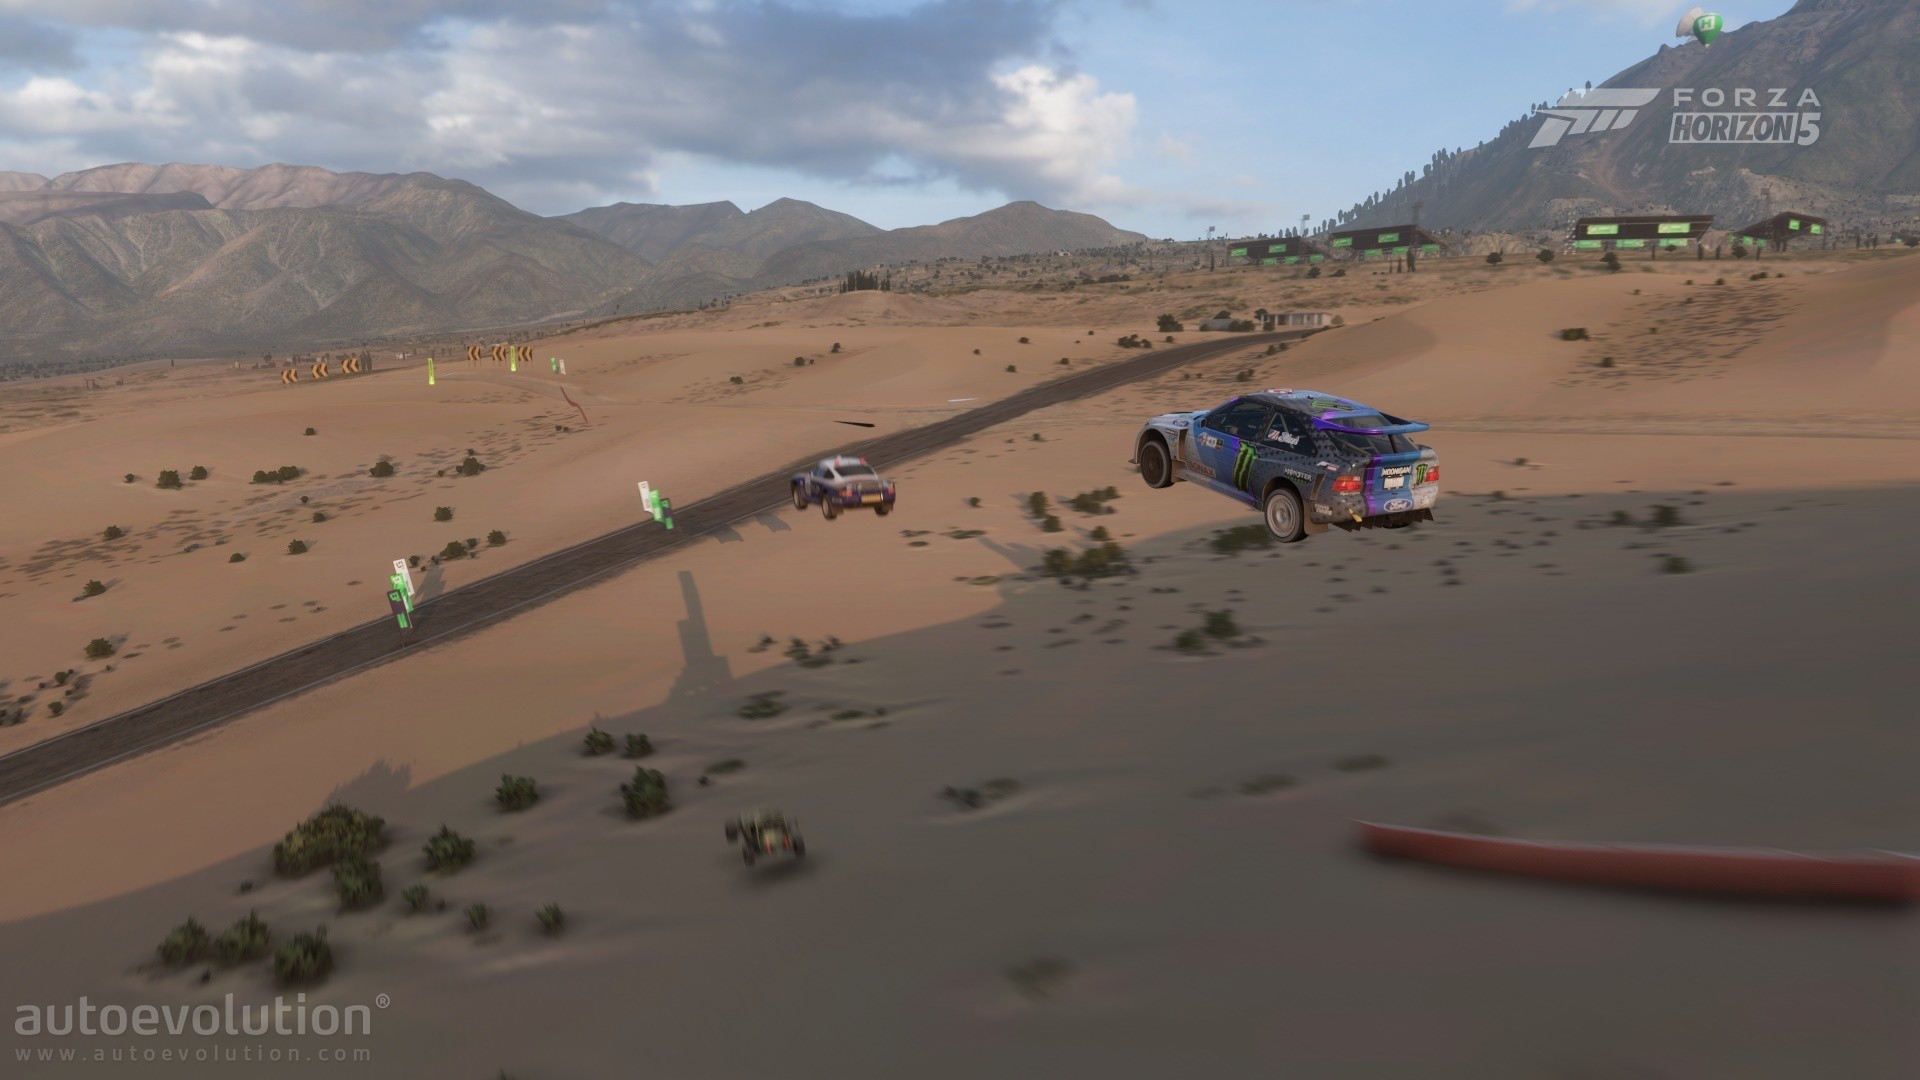 Strange Forza Horizon 5 tire glitch is ruining races - Dexerto